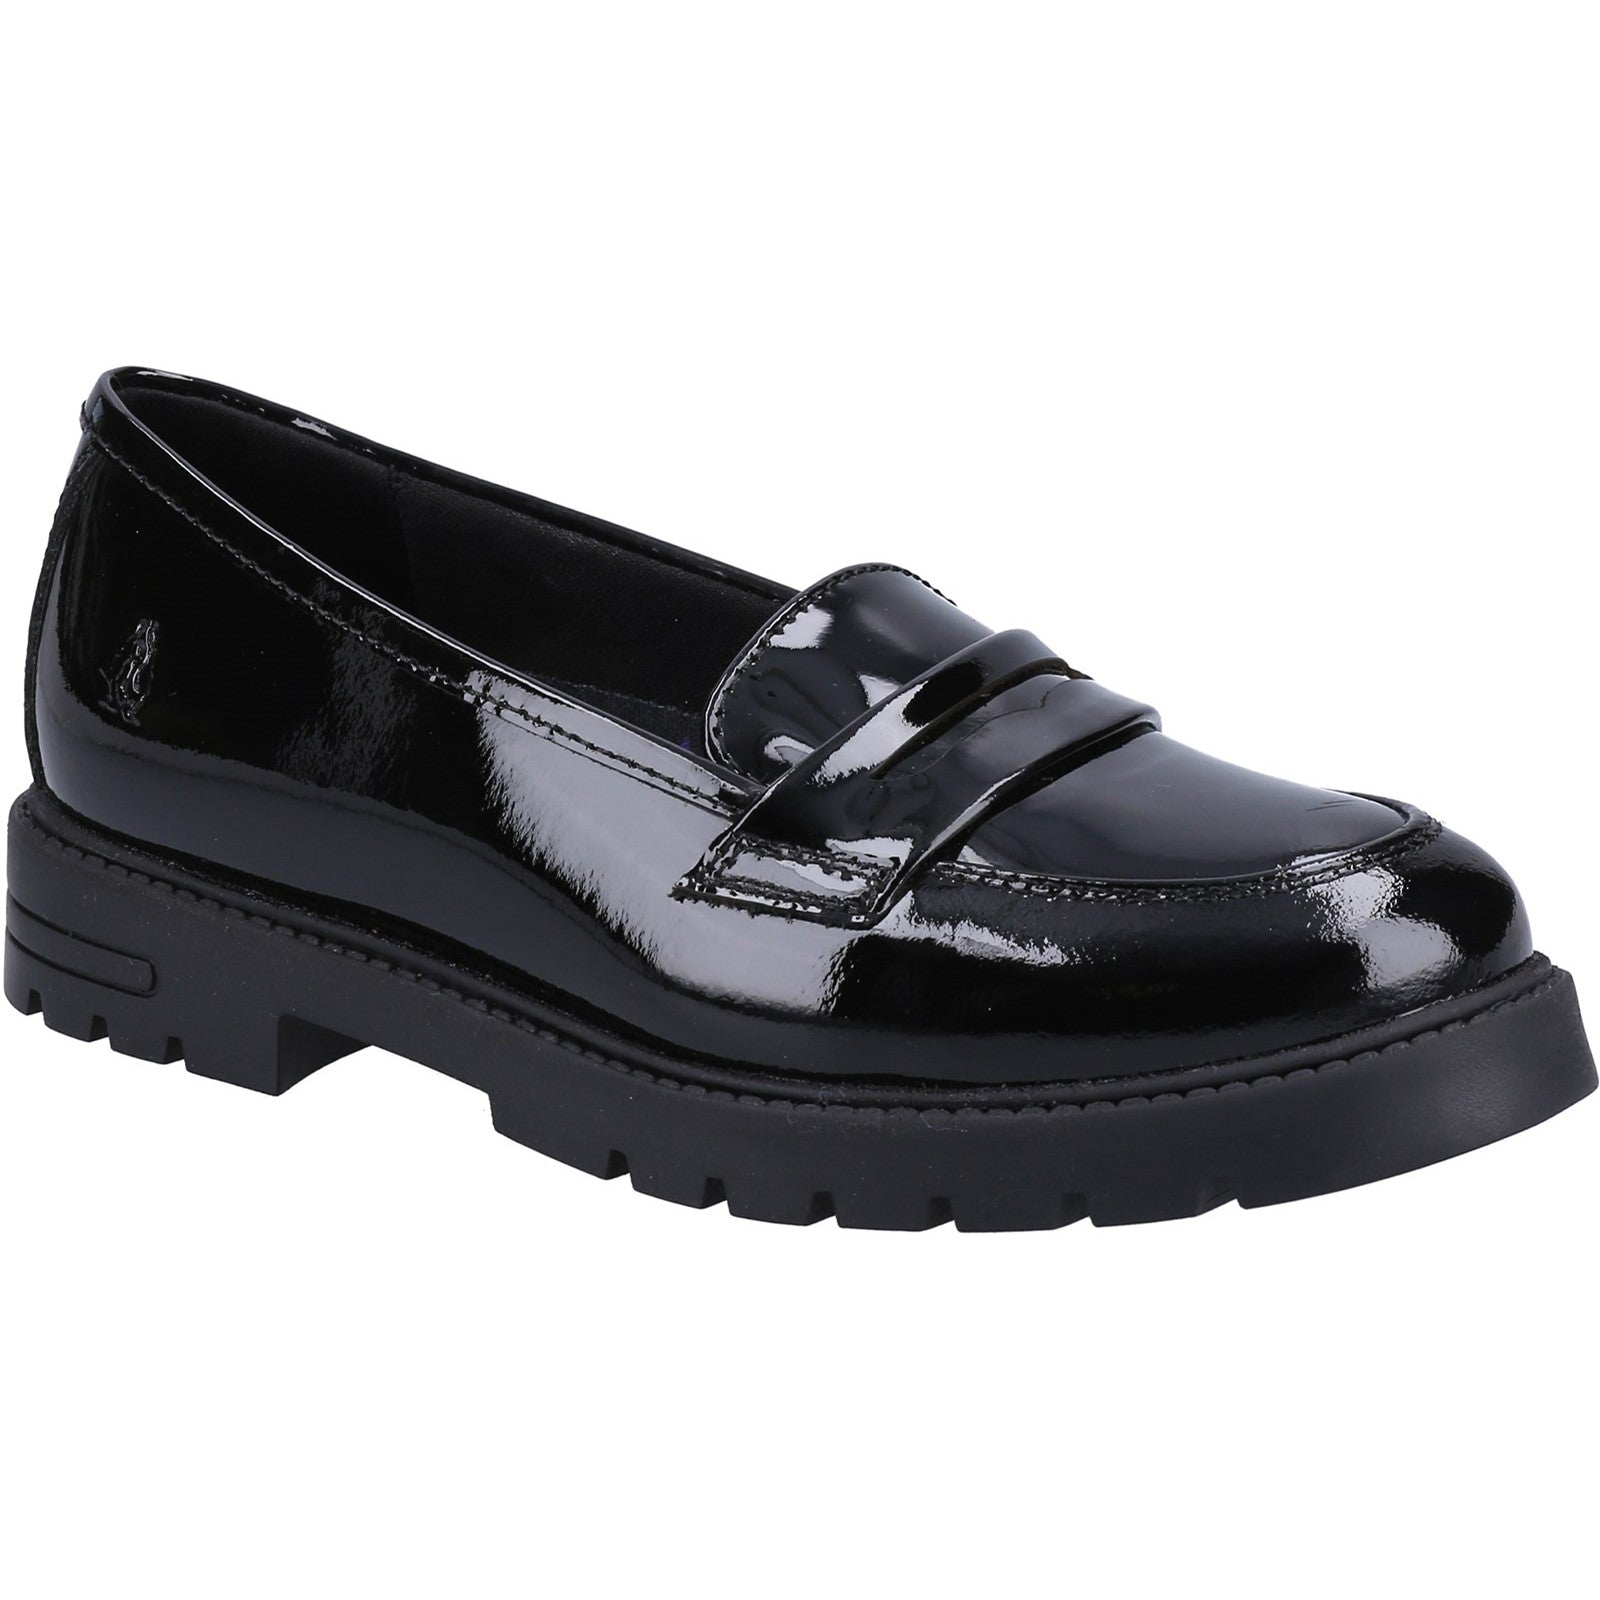 Hush Puppies Girls Hazel Patent Leather School Shoes - Black